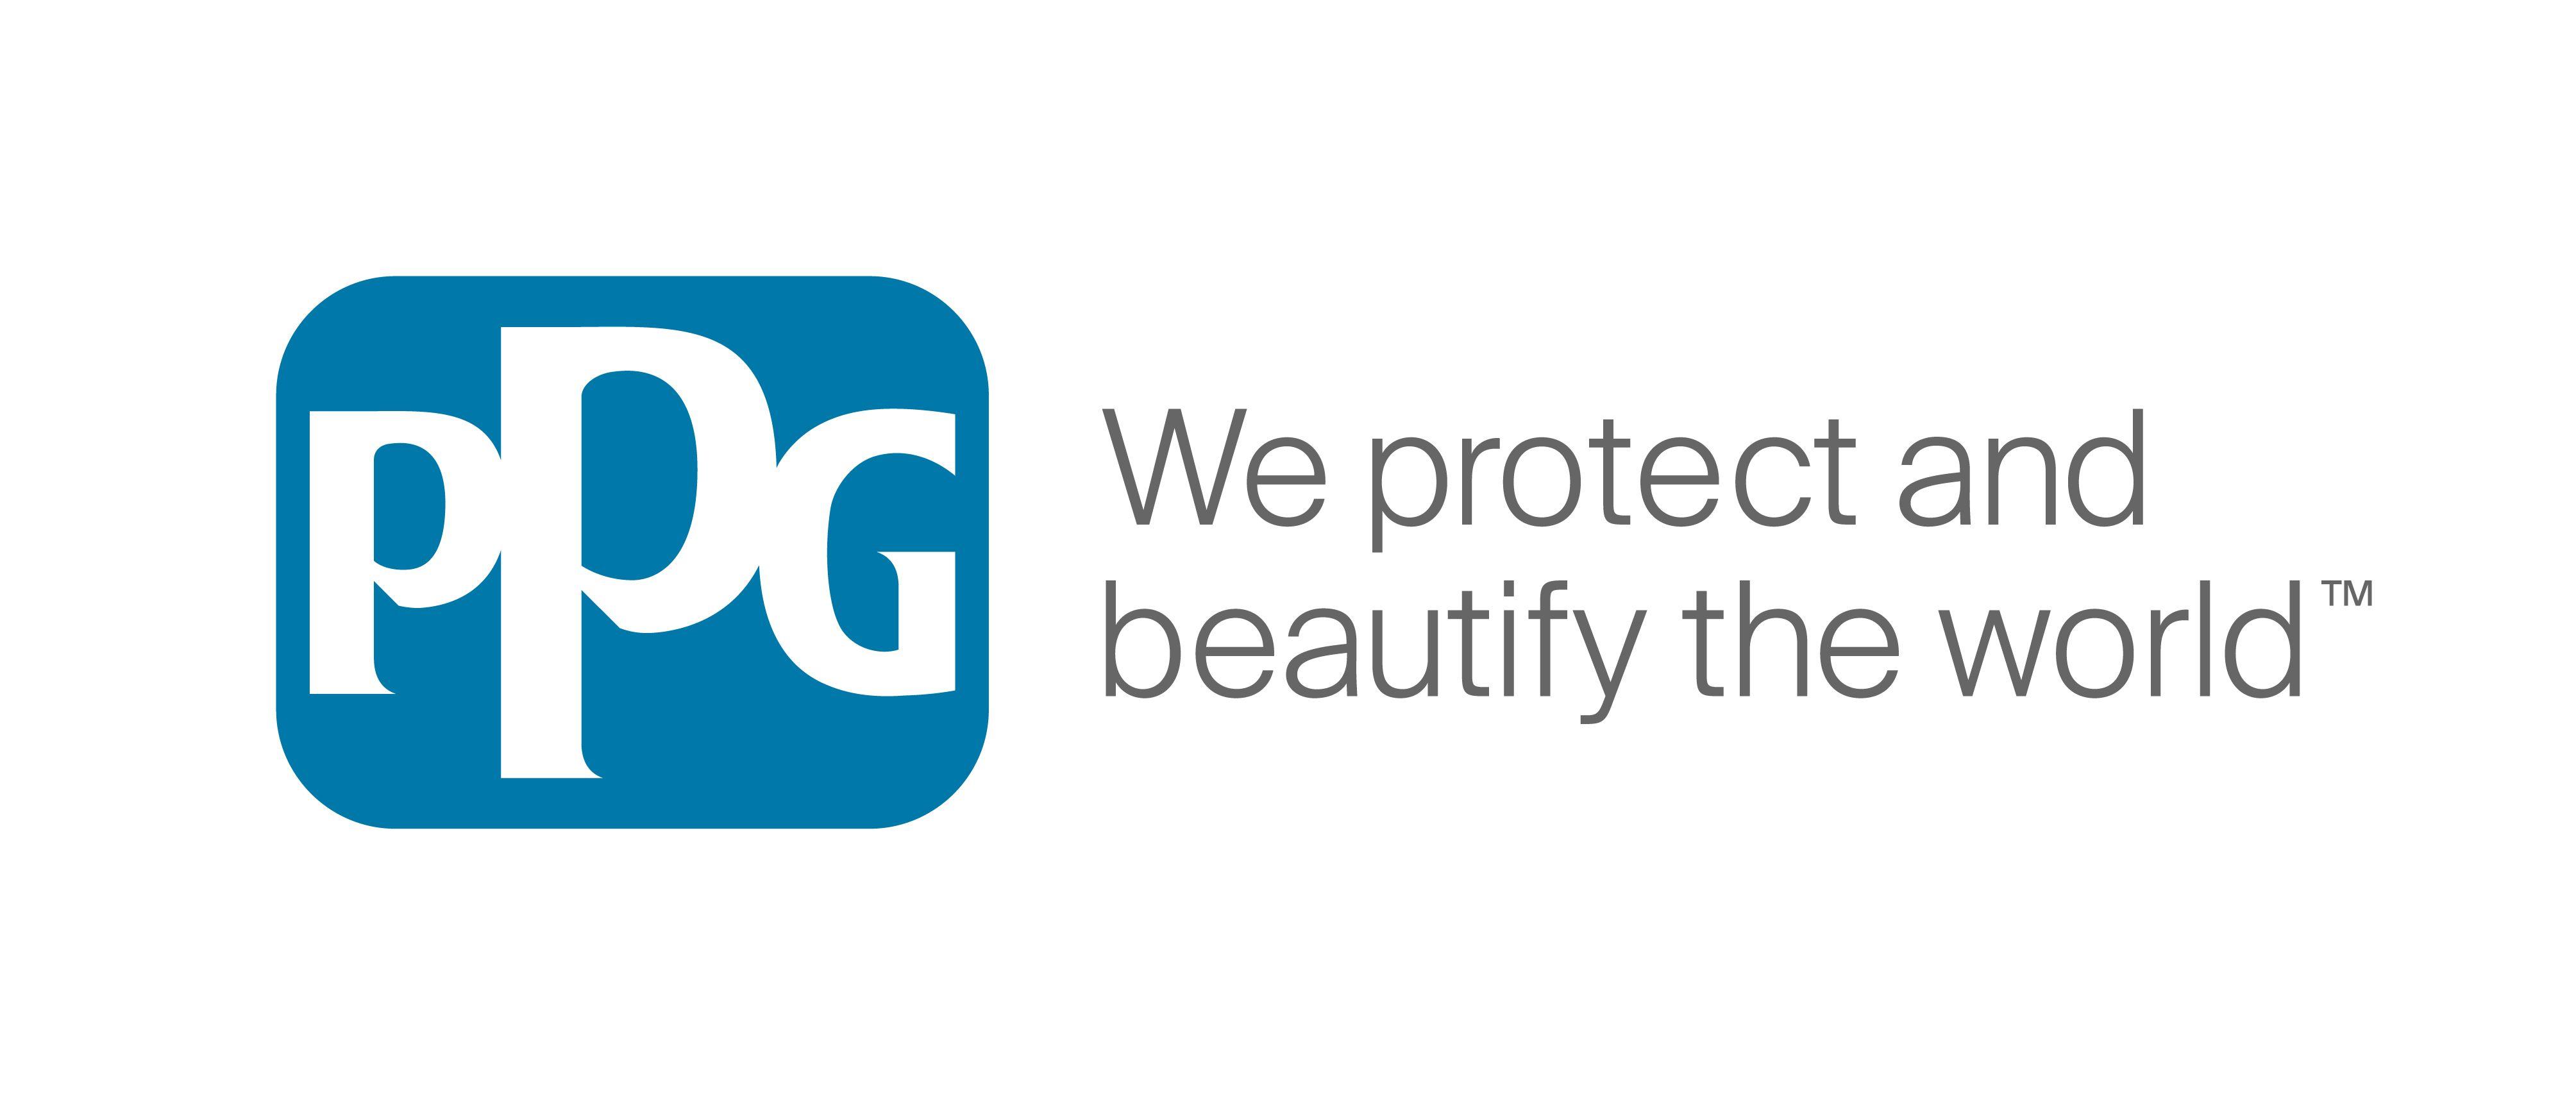 PPG Logo - Images | PPG Newsroom